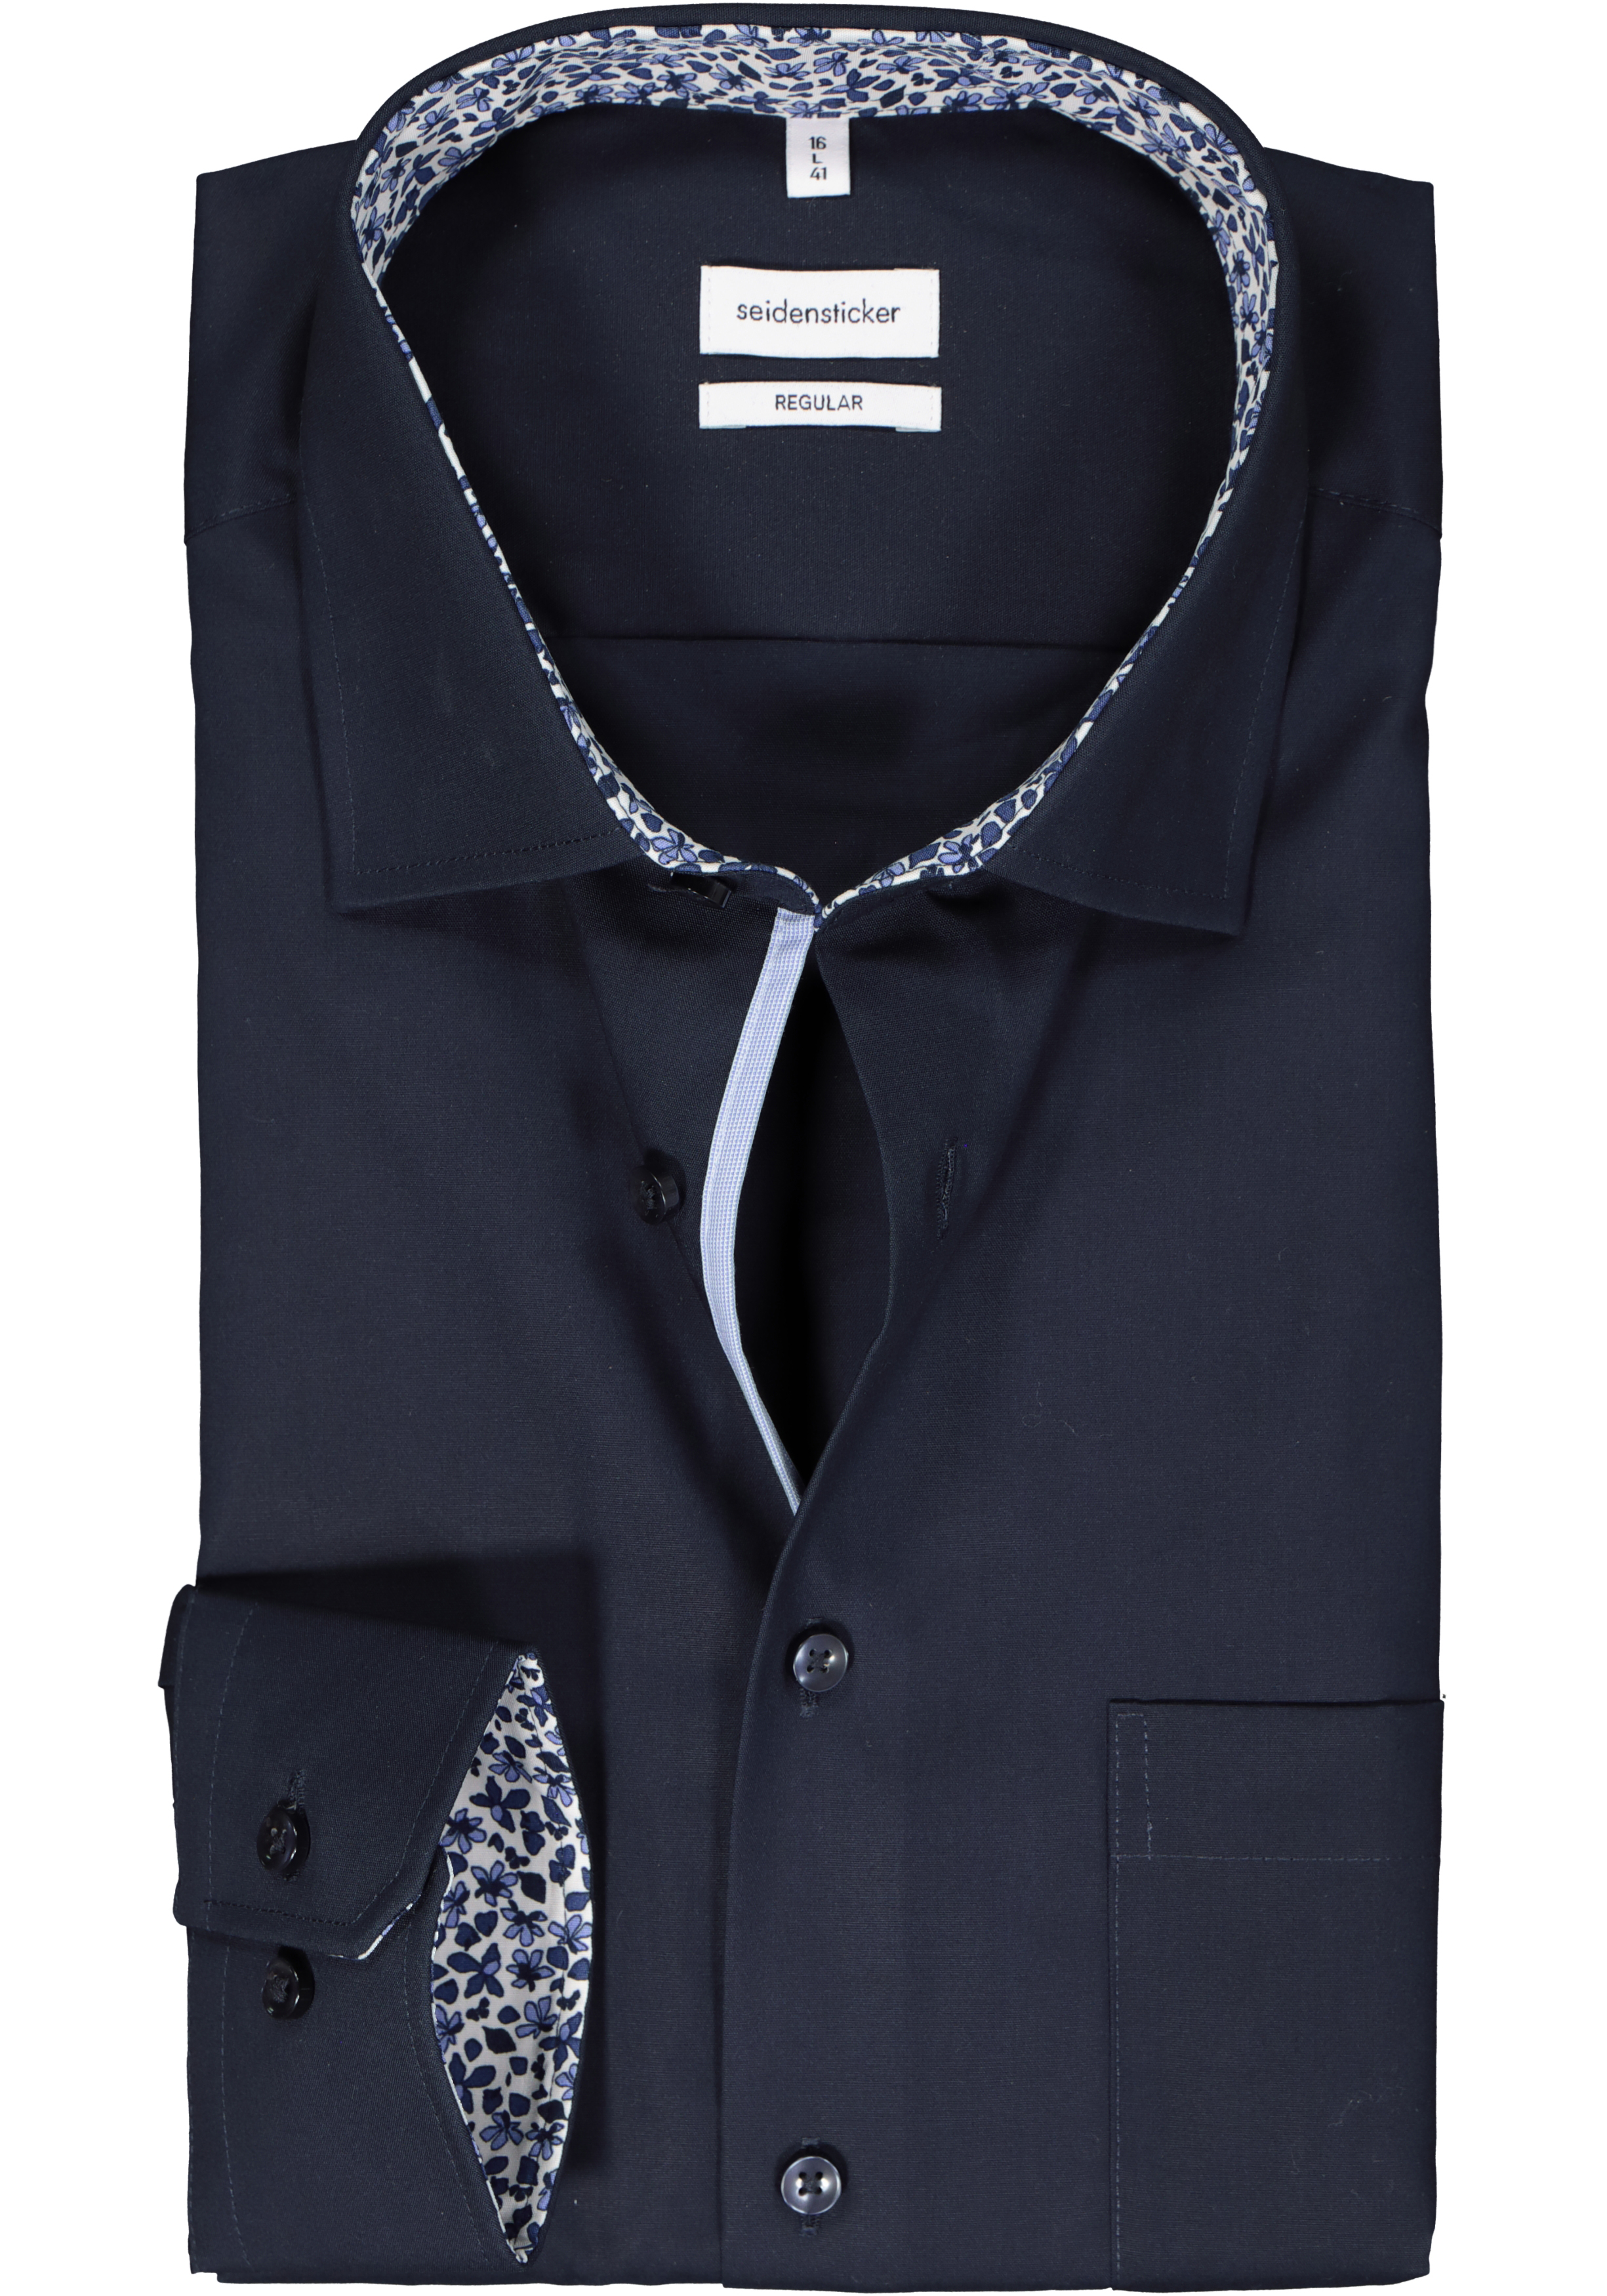 Seidensticker regular fit overhemd, donkerblauw (contrast)